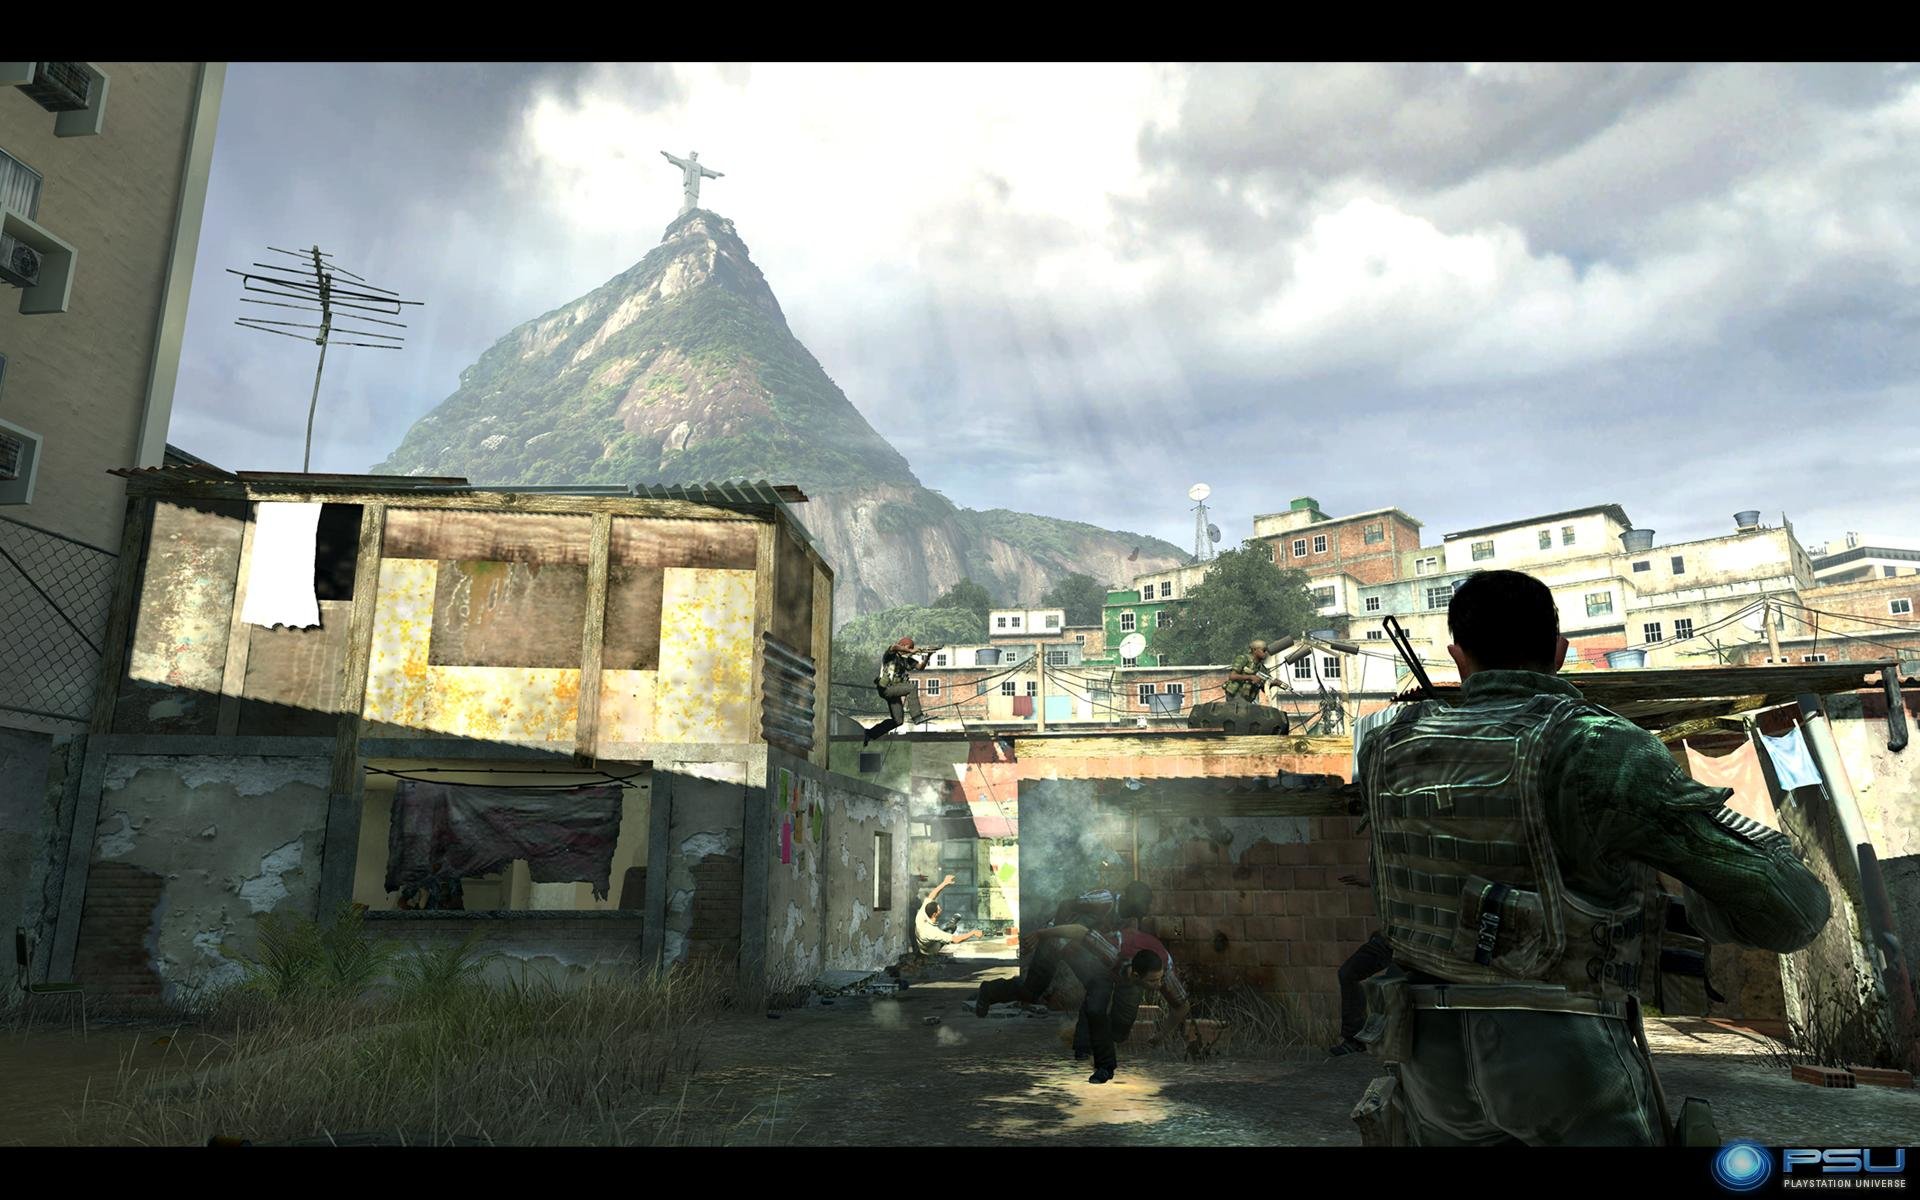 Best Call Of Duty 4: Modern Warfare wallpaper ID:20534 for High Resolution hd 1920x1200 computer